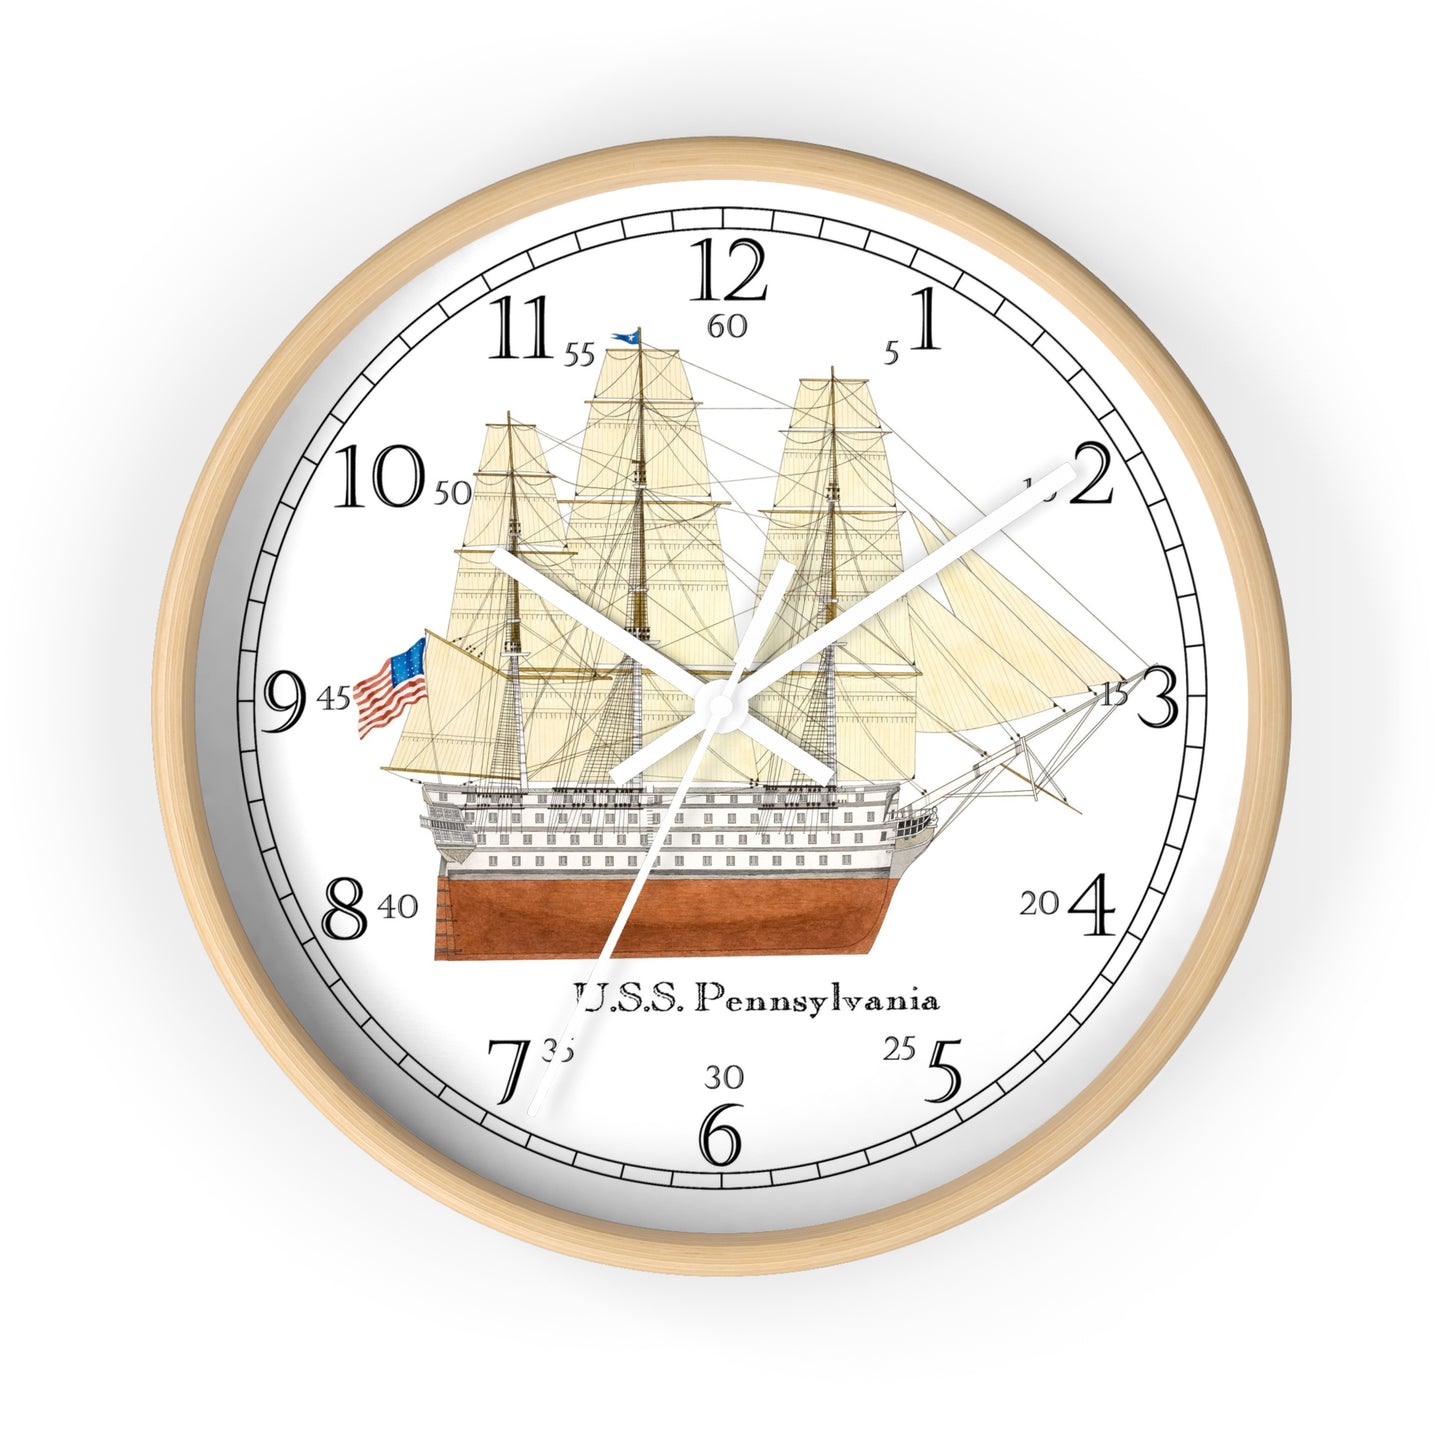 U.S.S. Pennsylvania English Numeral Clock